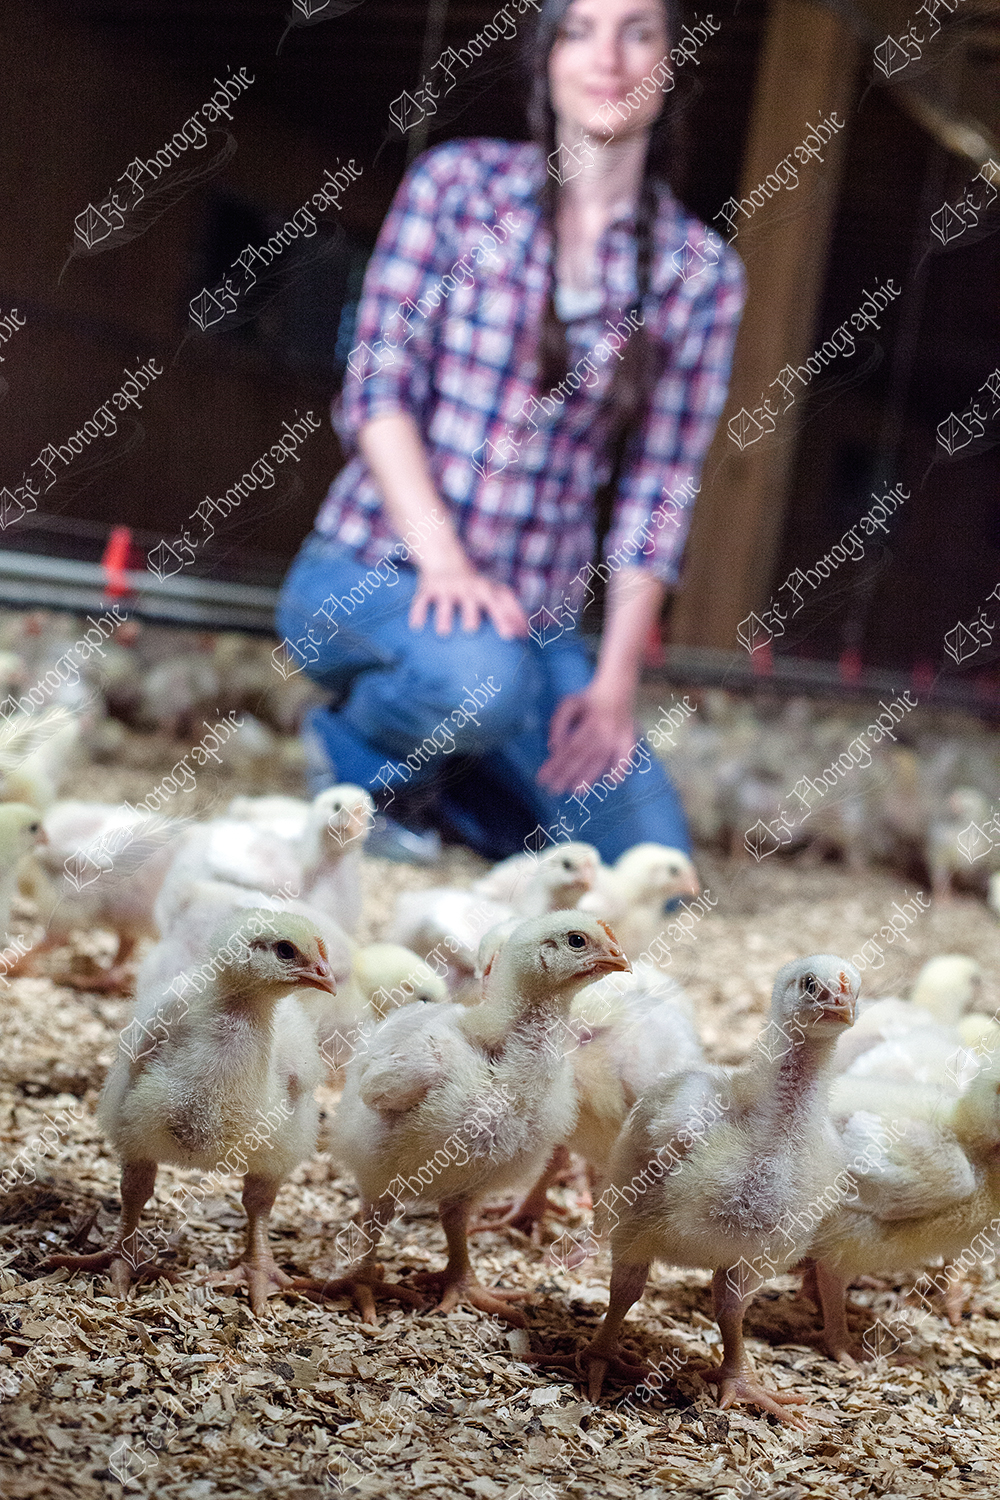 elze_photo_9061_poussins_agriculture_animal_broiler_chicken_farm